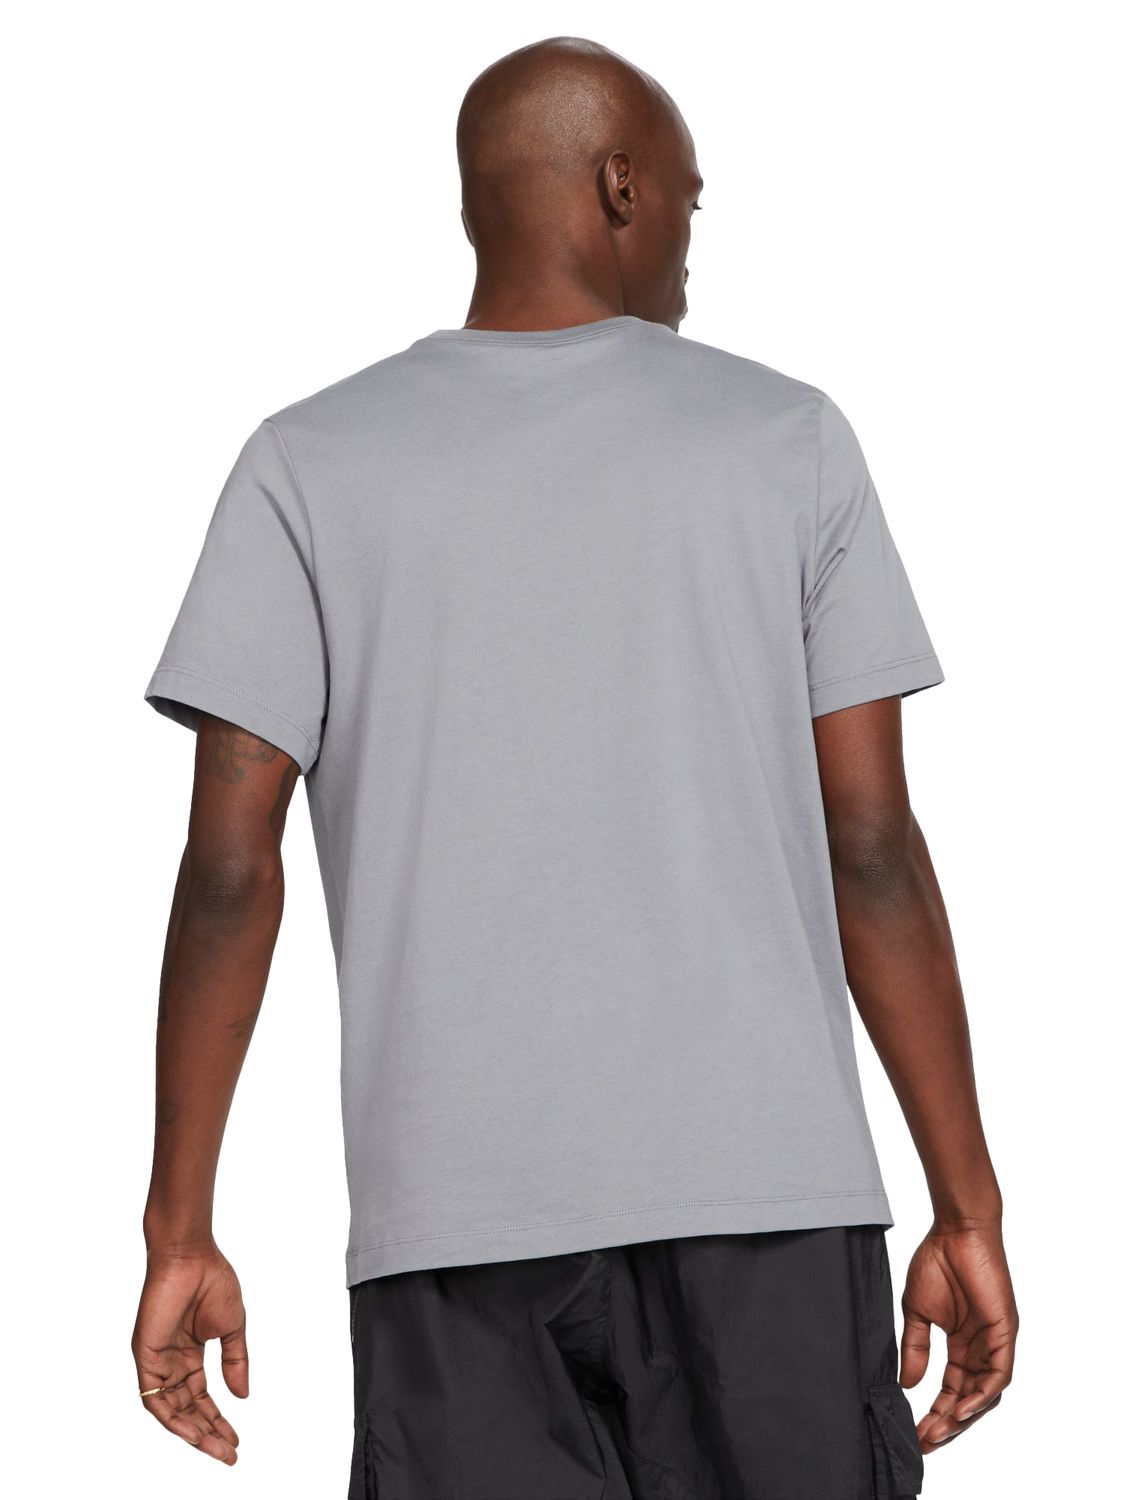 Jordan AJ3 Graphic T-Shirt